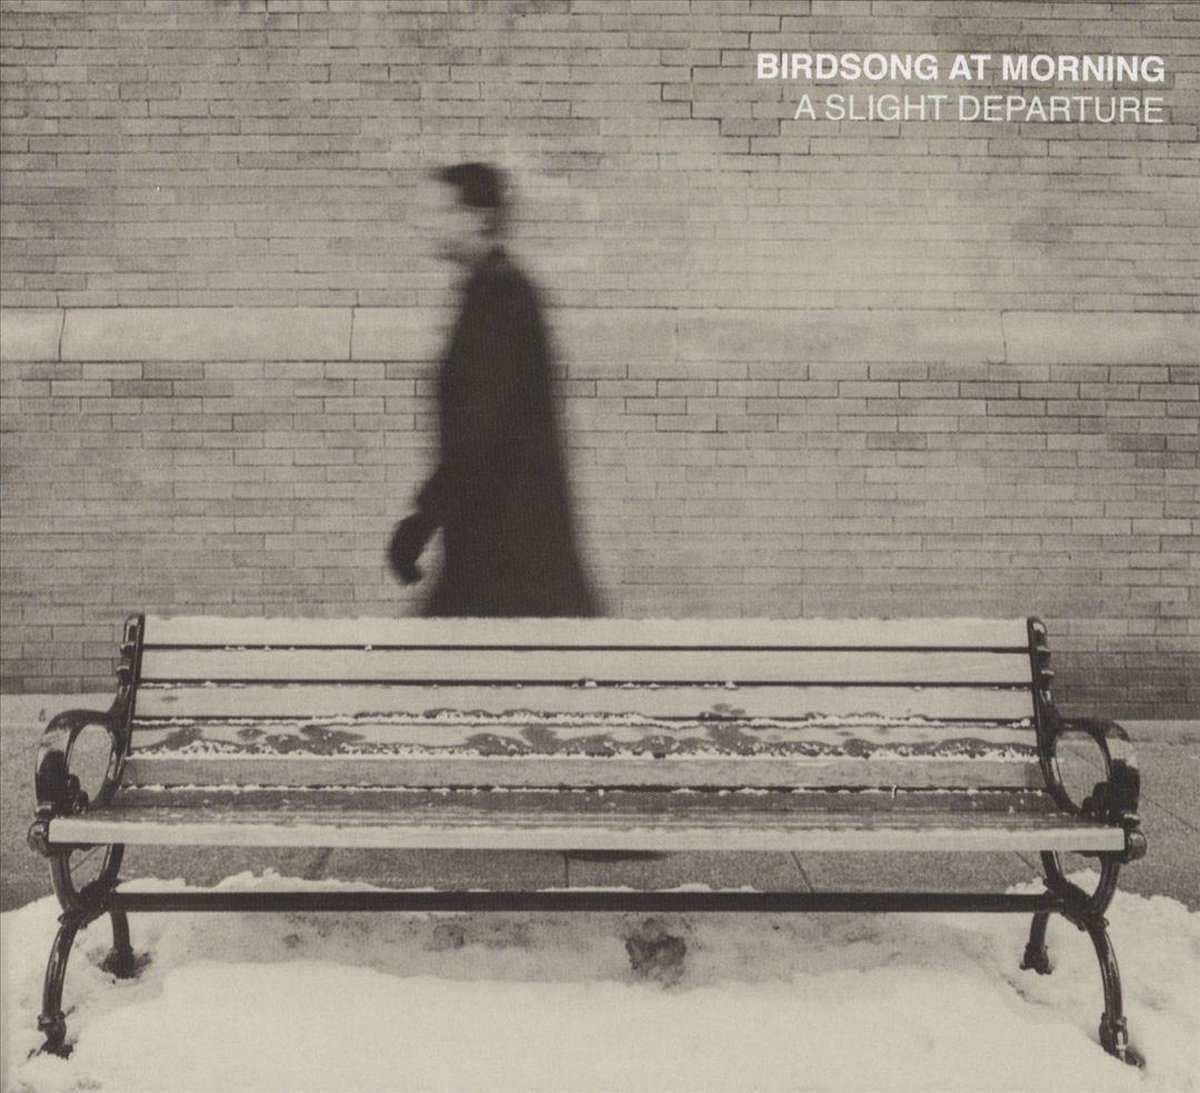 Slight Departure - Birdsong at Morning